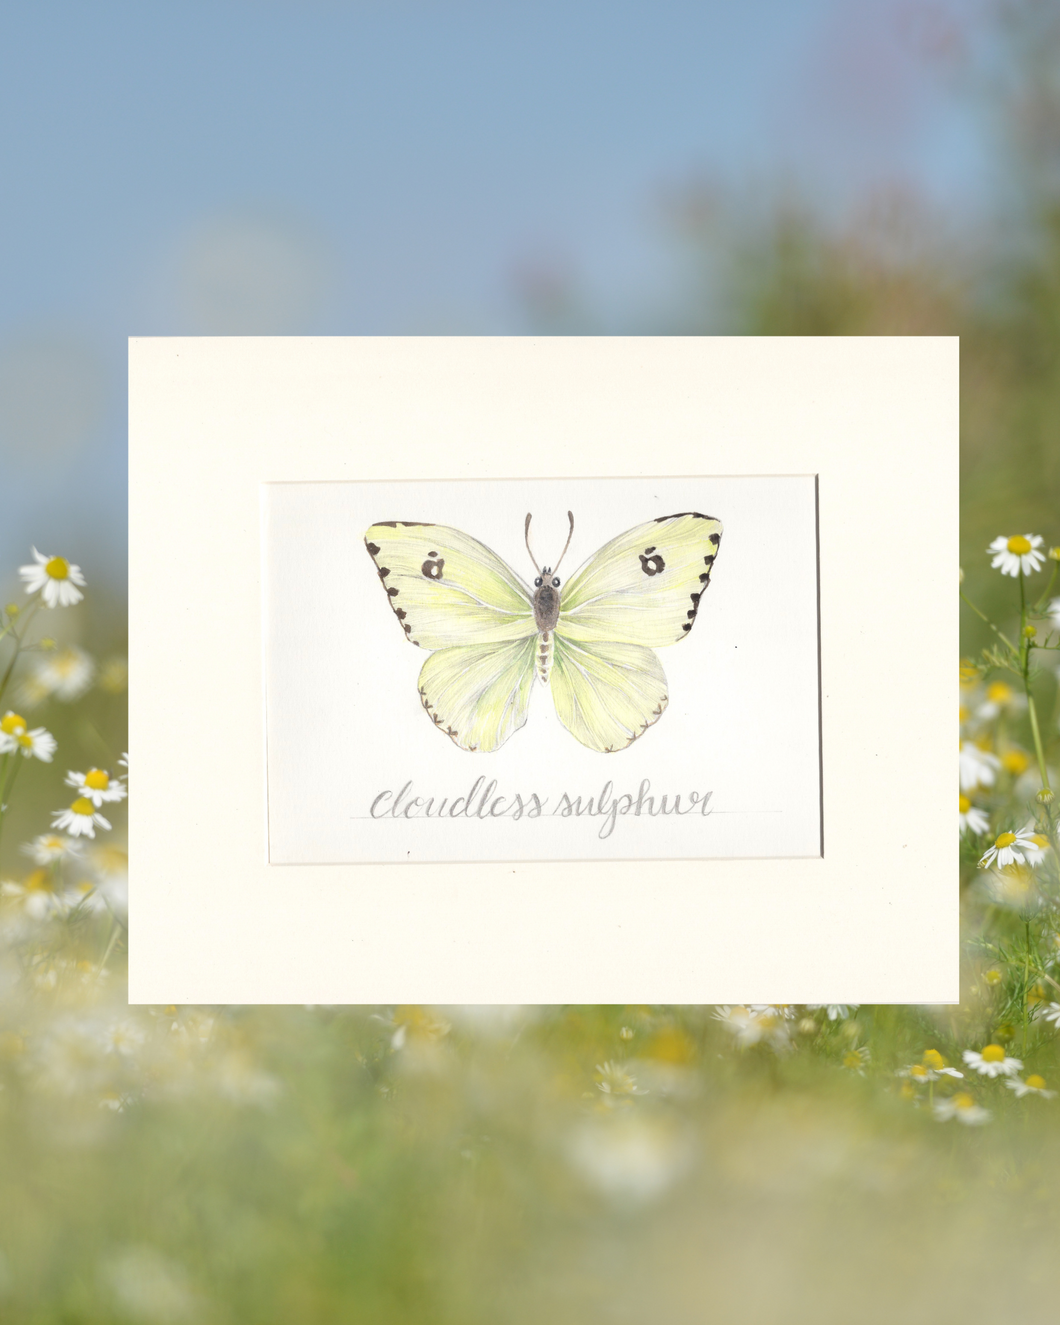 Cloudless Sulphur Butterfly Original Illustration